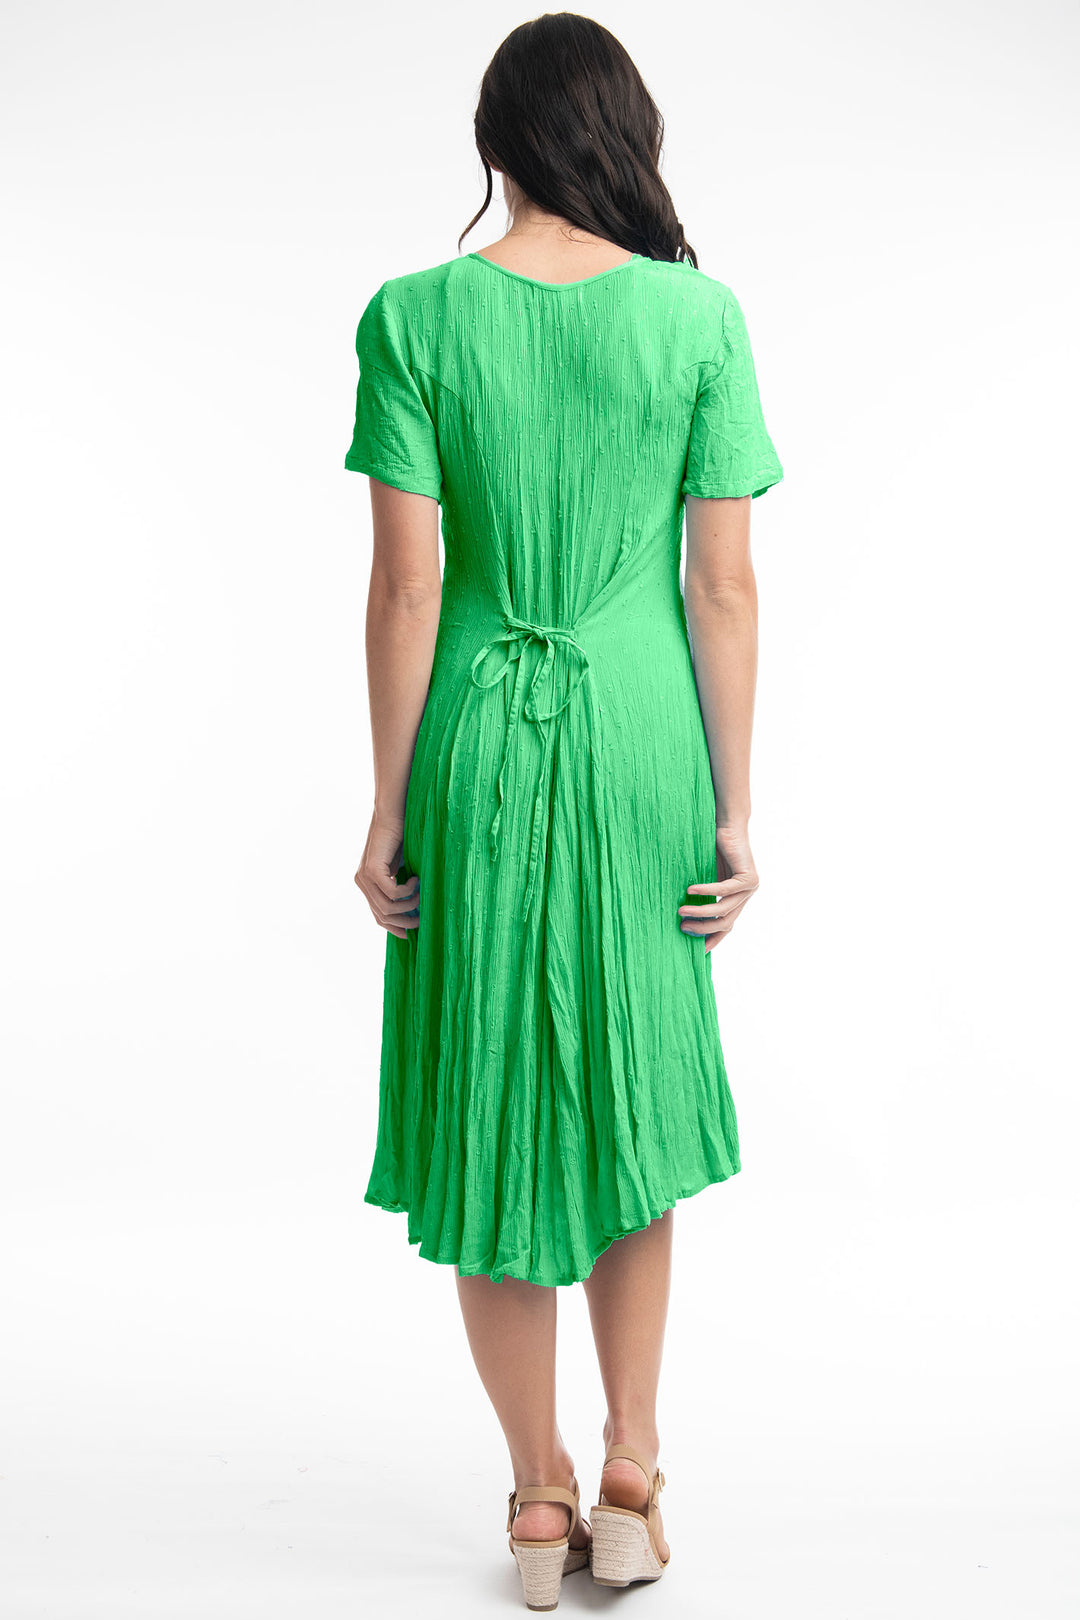 Orientique O81261 Parrot Green Short Sleeve Tie Back Godet Dress - Experience Boutique